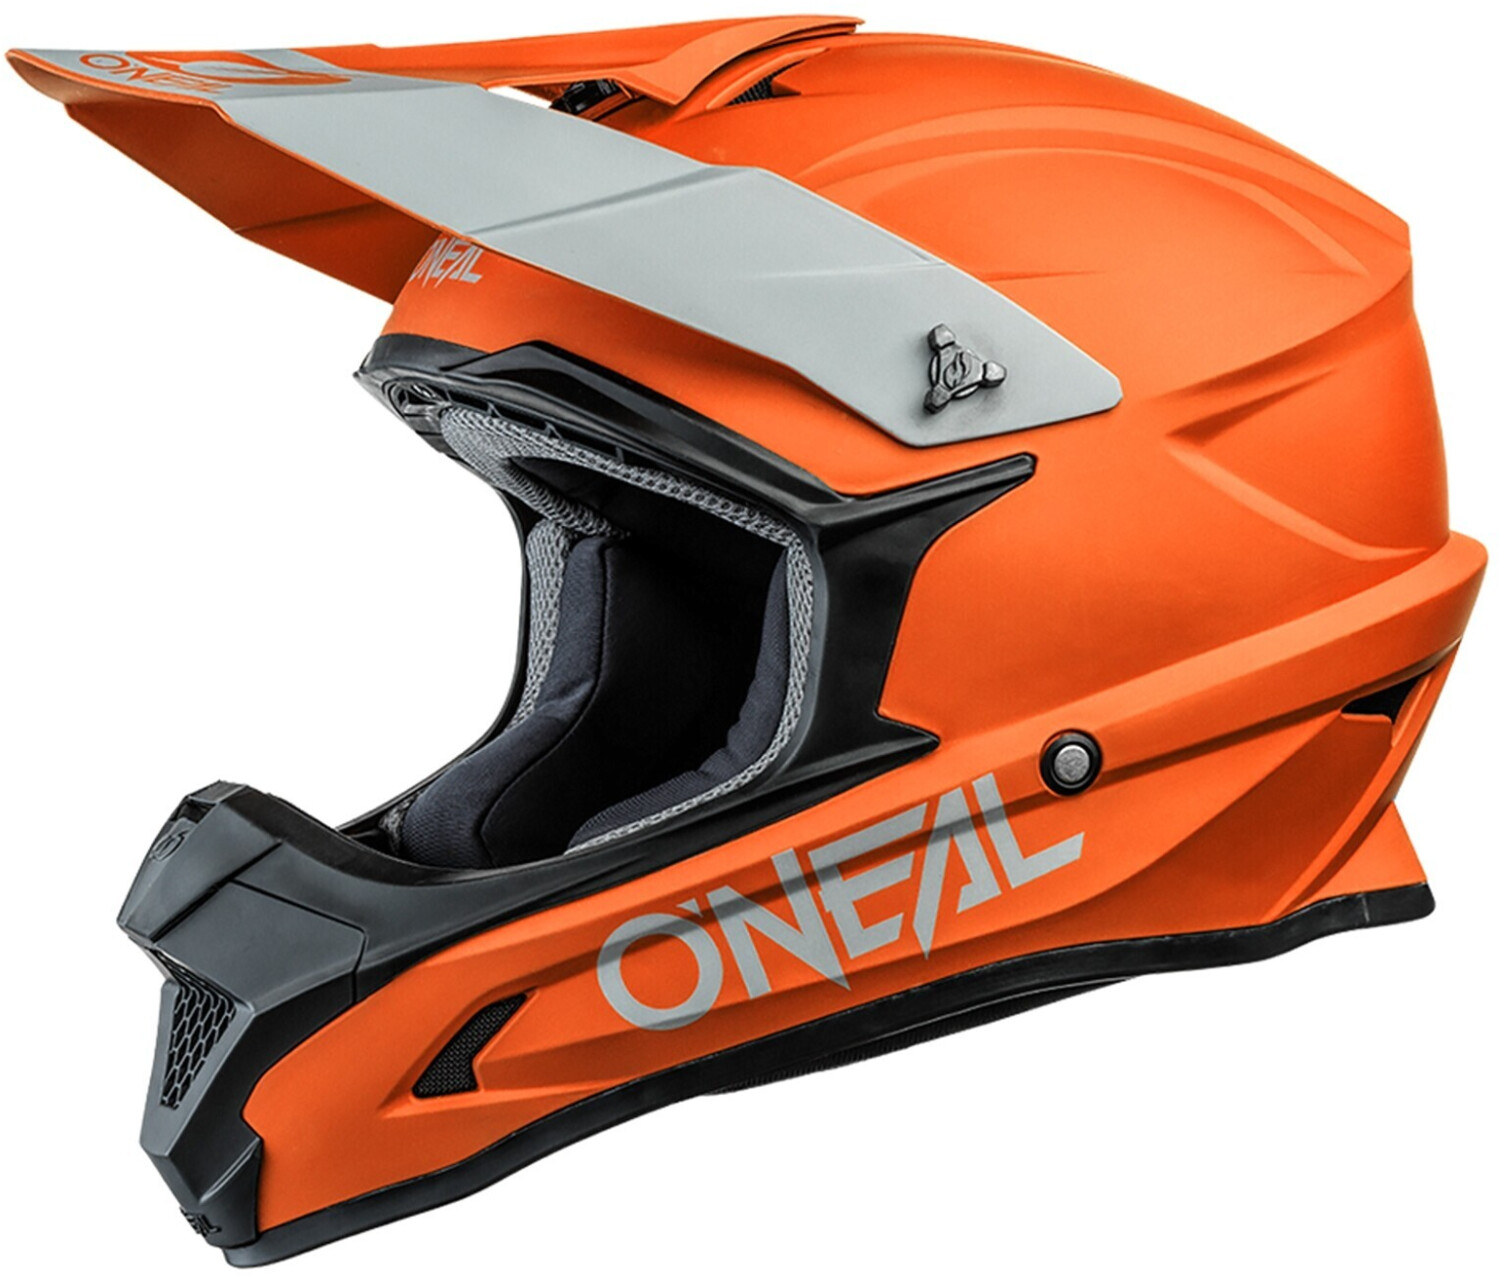 Casco Oneal 1 Series Solid Azul Motocross Enduro Tamaño del casco L (59-60  cm)